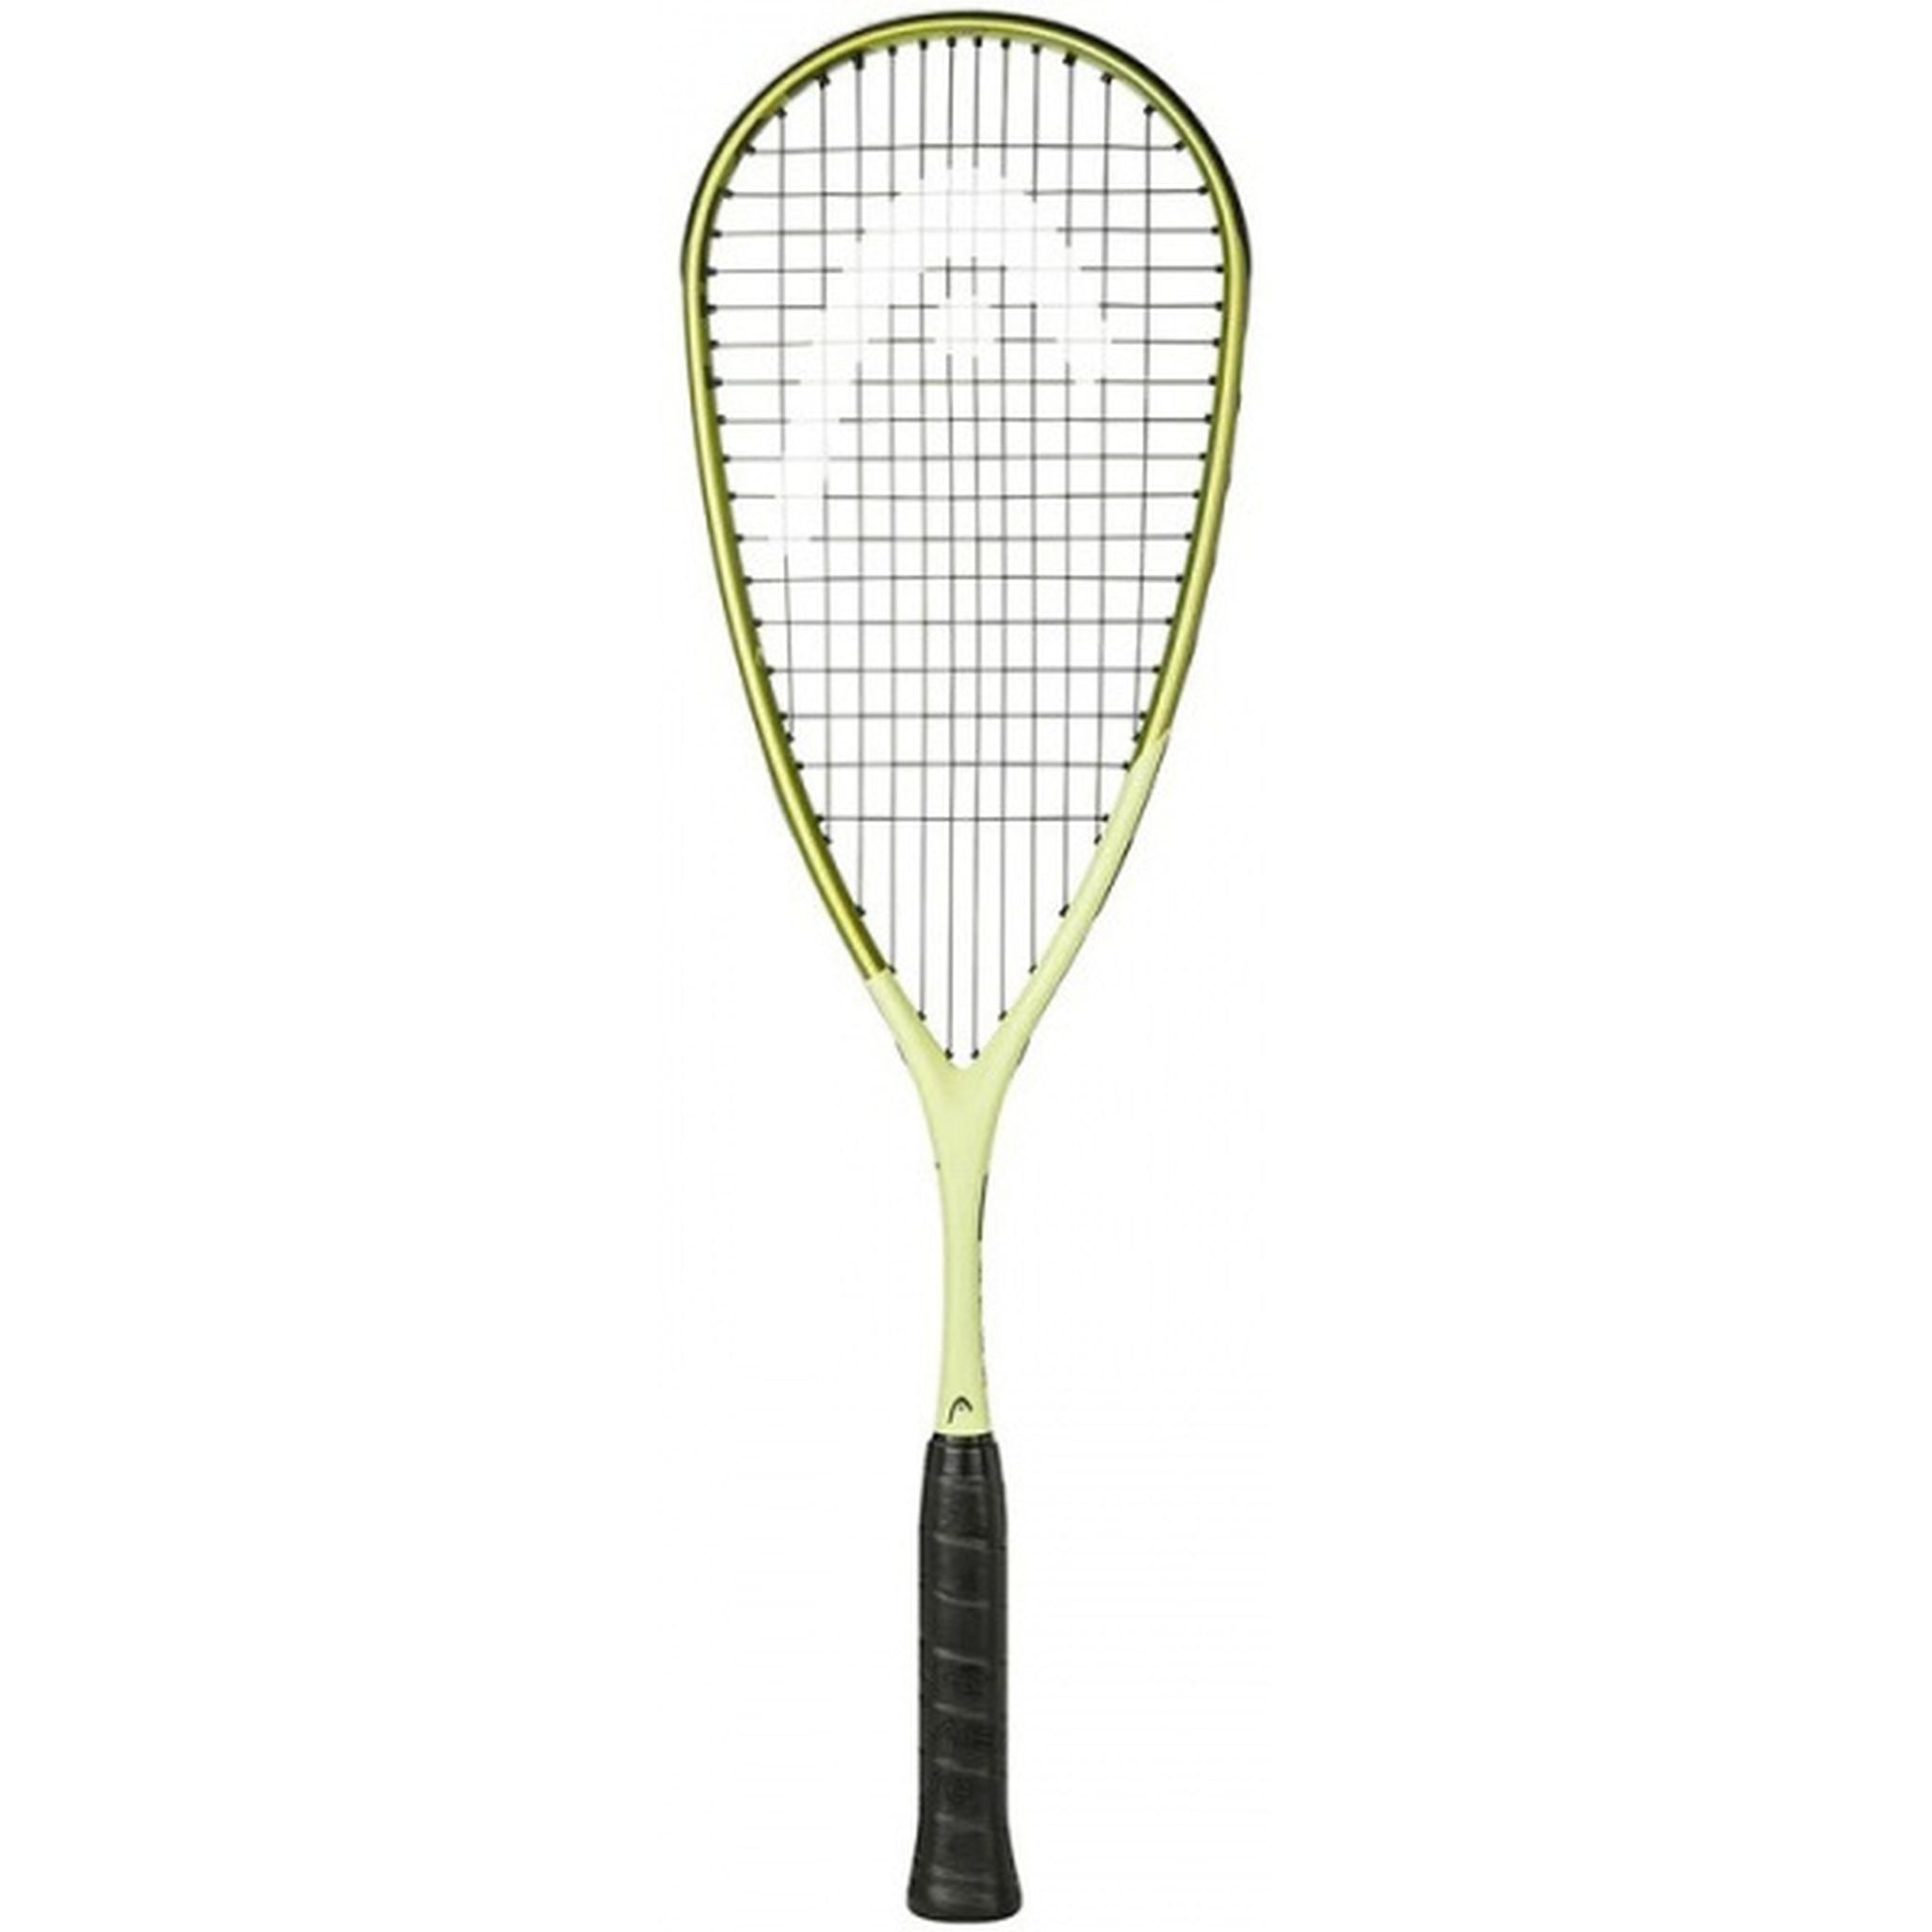 Head Extreme 135 Squash Racquet